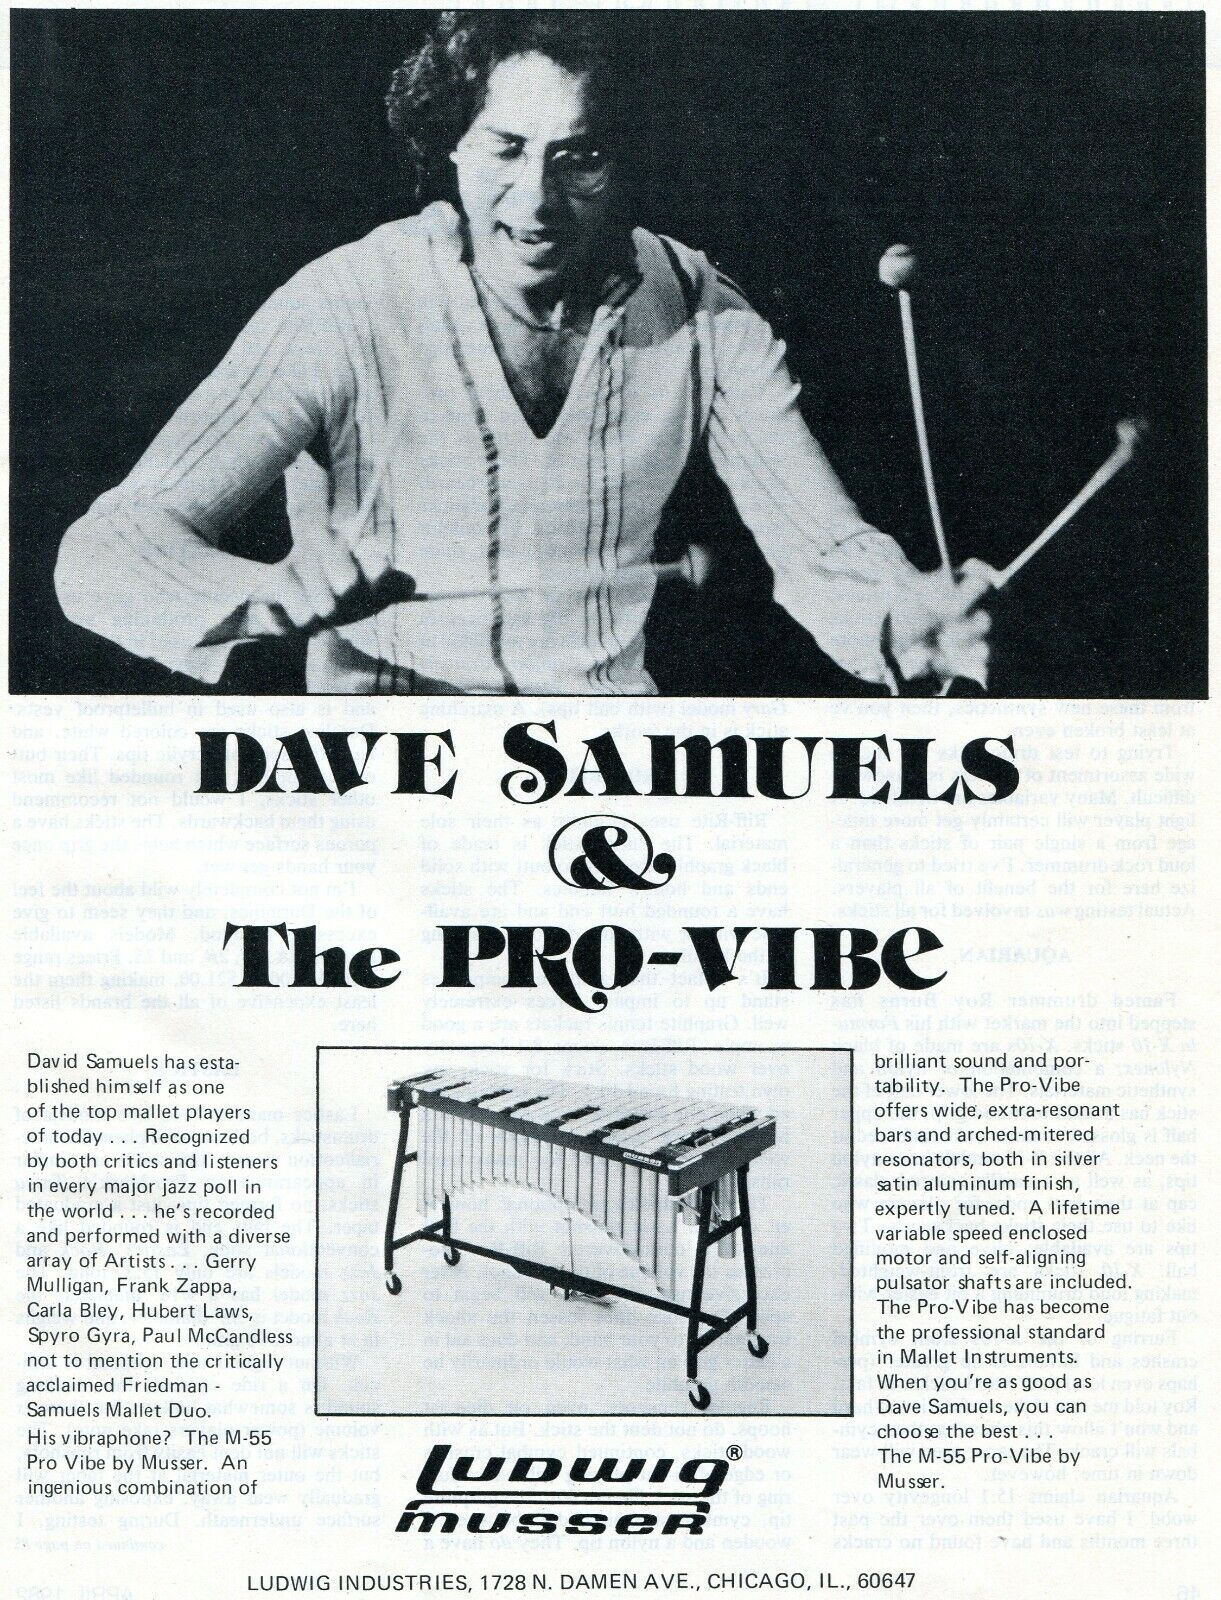 1982 Print Ad of Ludwig Musser M55 Pro-Vibe Vibraphone w Dave Samuels